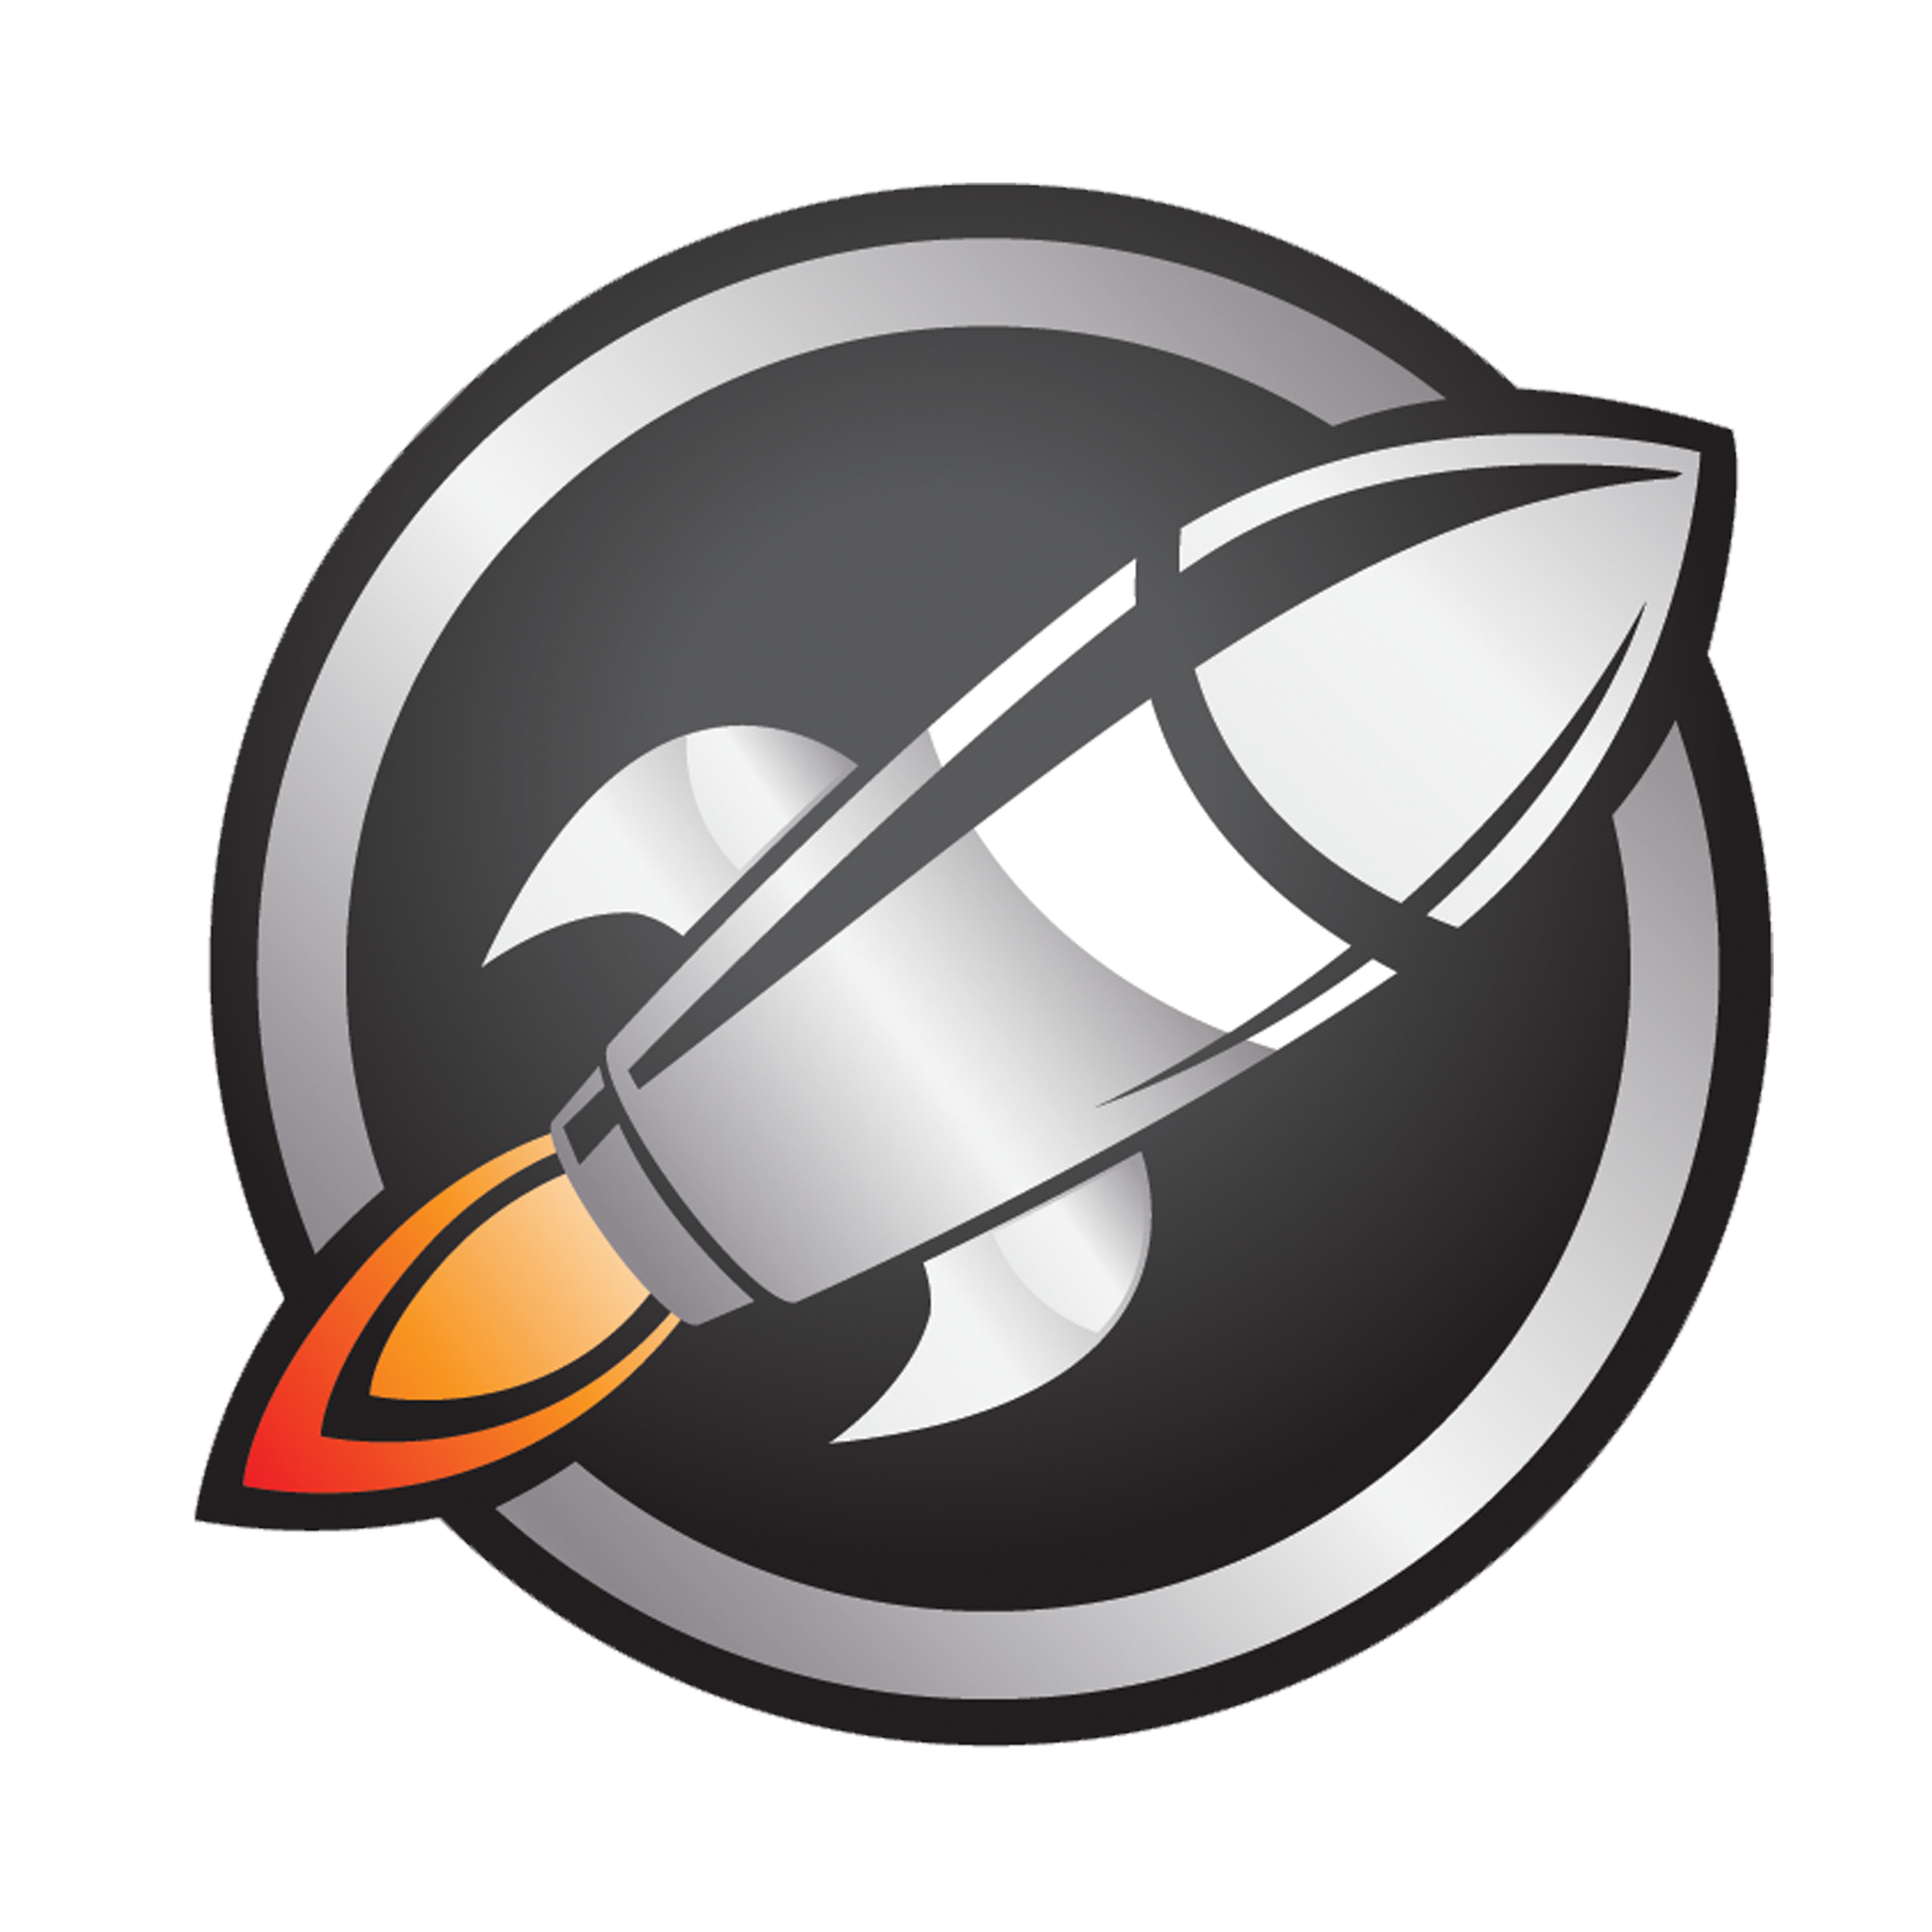 Agile Rocket's primary logo